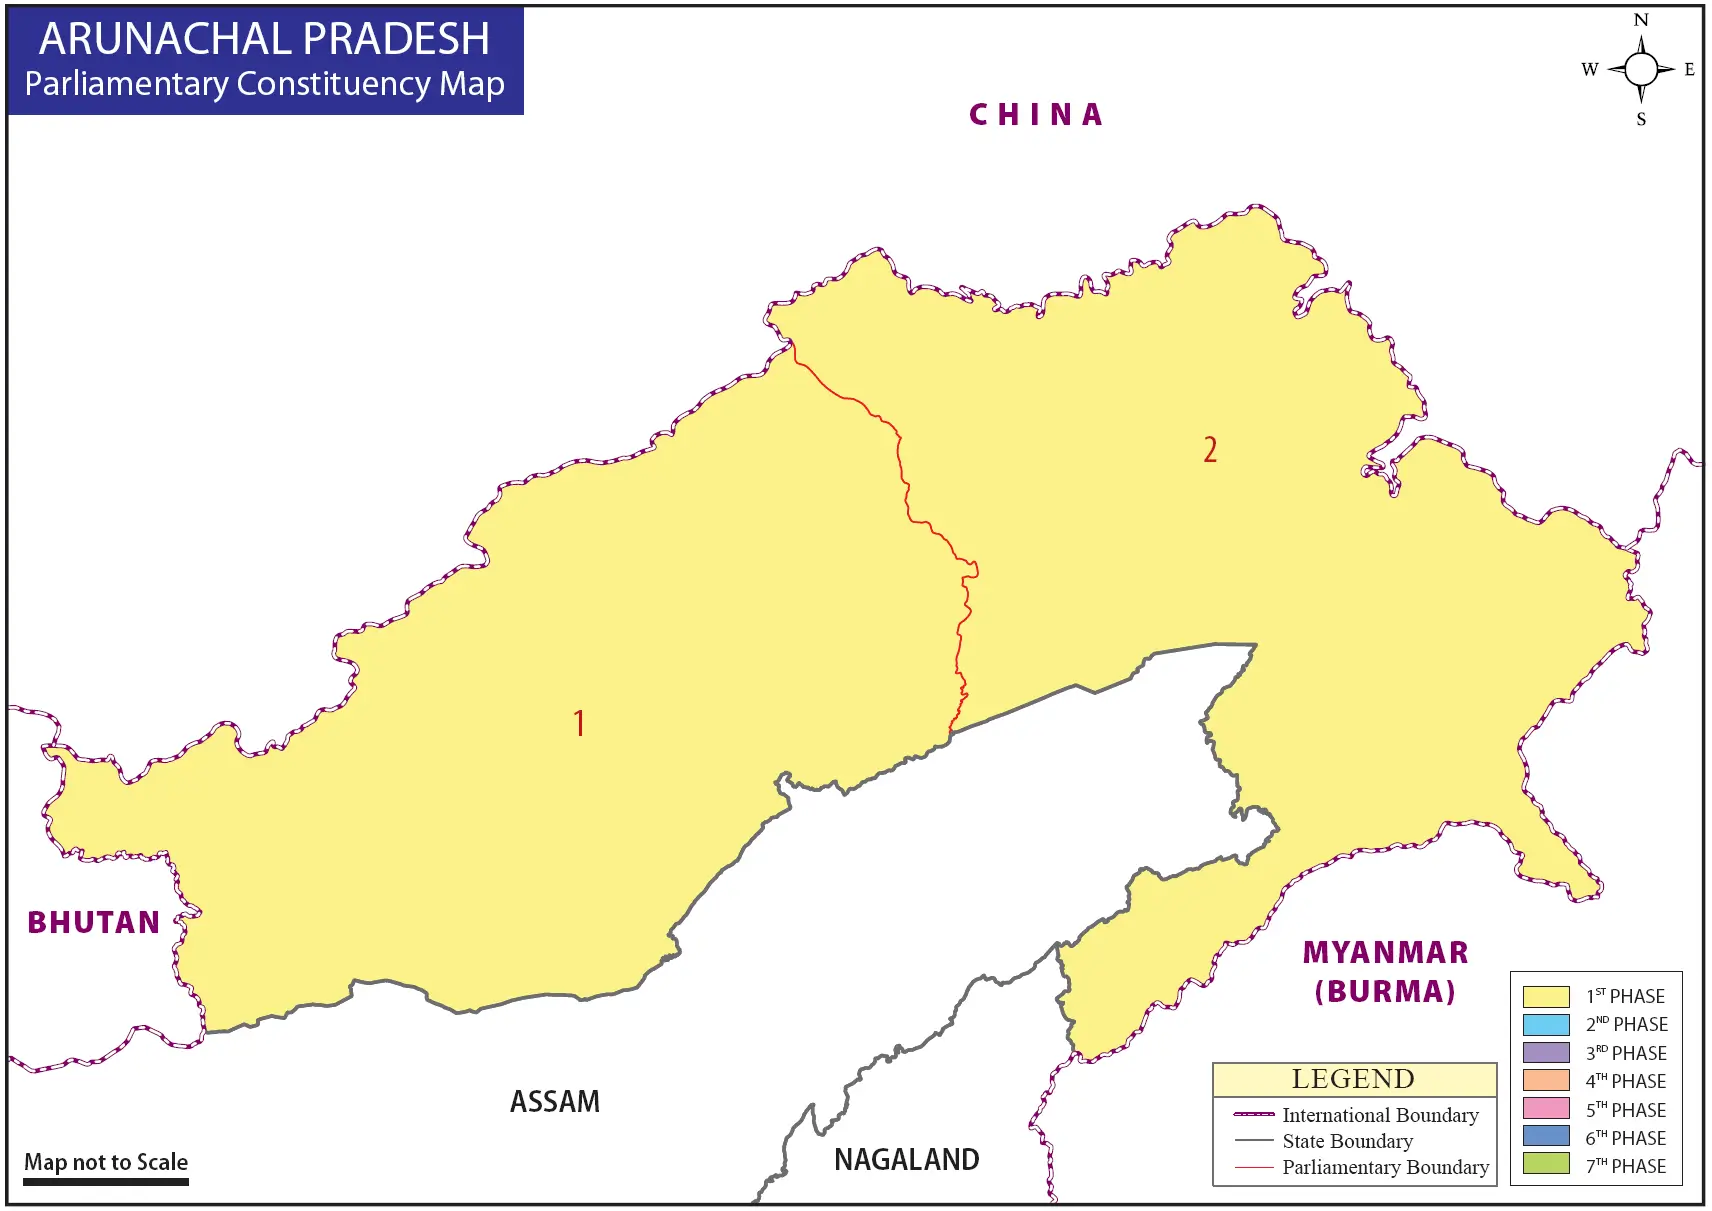 Arunachal Pradesh Parliamentary Constituency Map